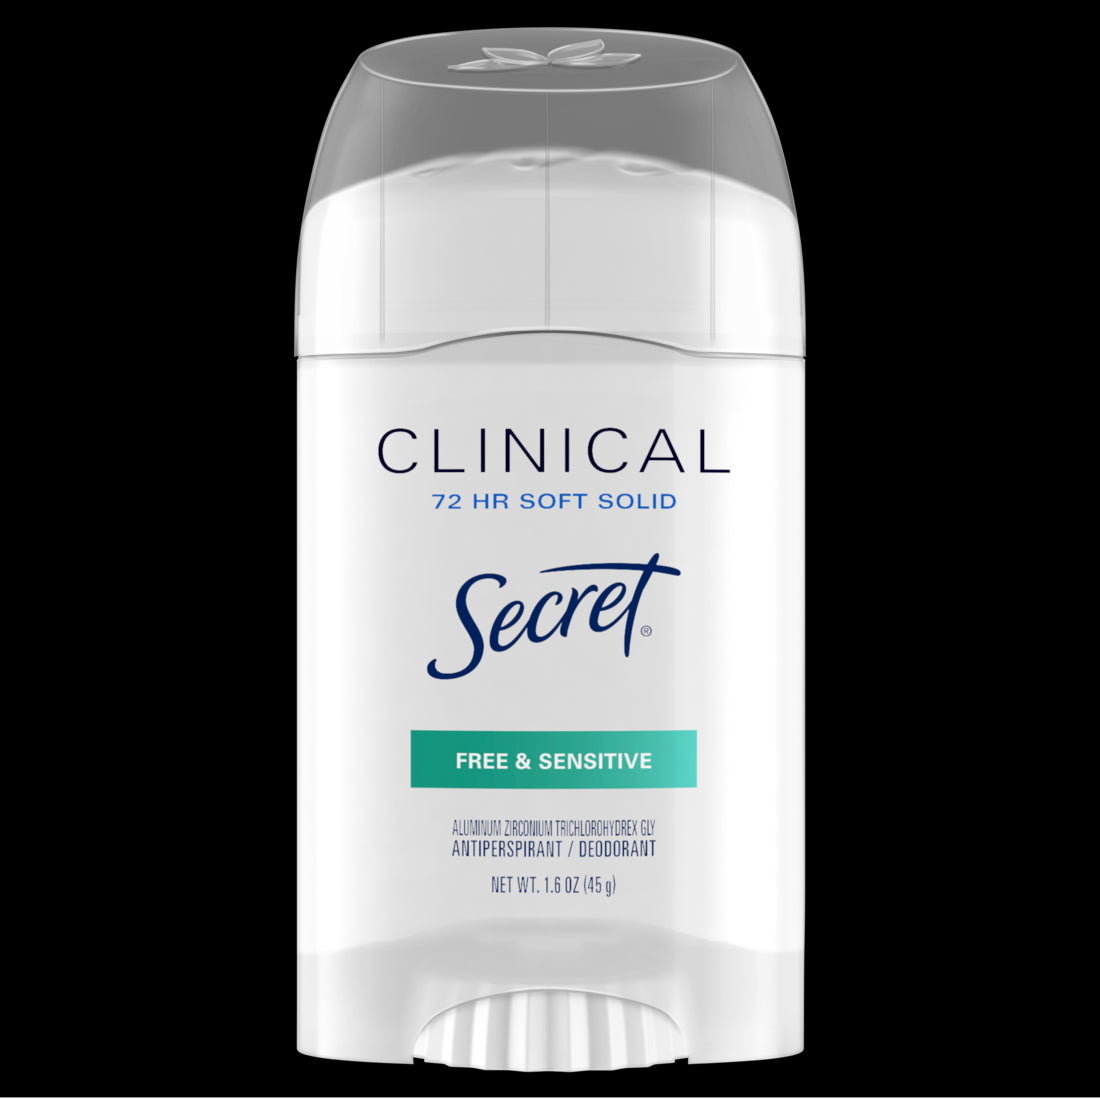 Secret Clinical Strength Soft Solid Antiperspirant and Deodorant for Women Free & Sensitive - 1.6oz/12pk